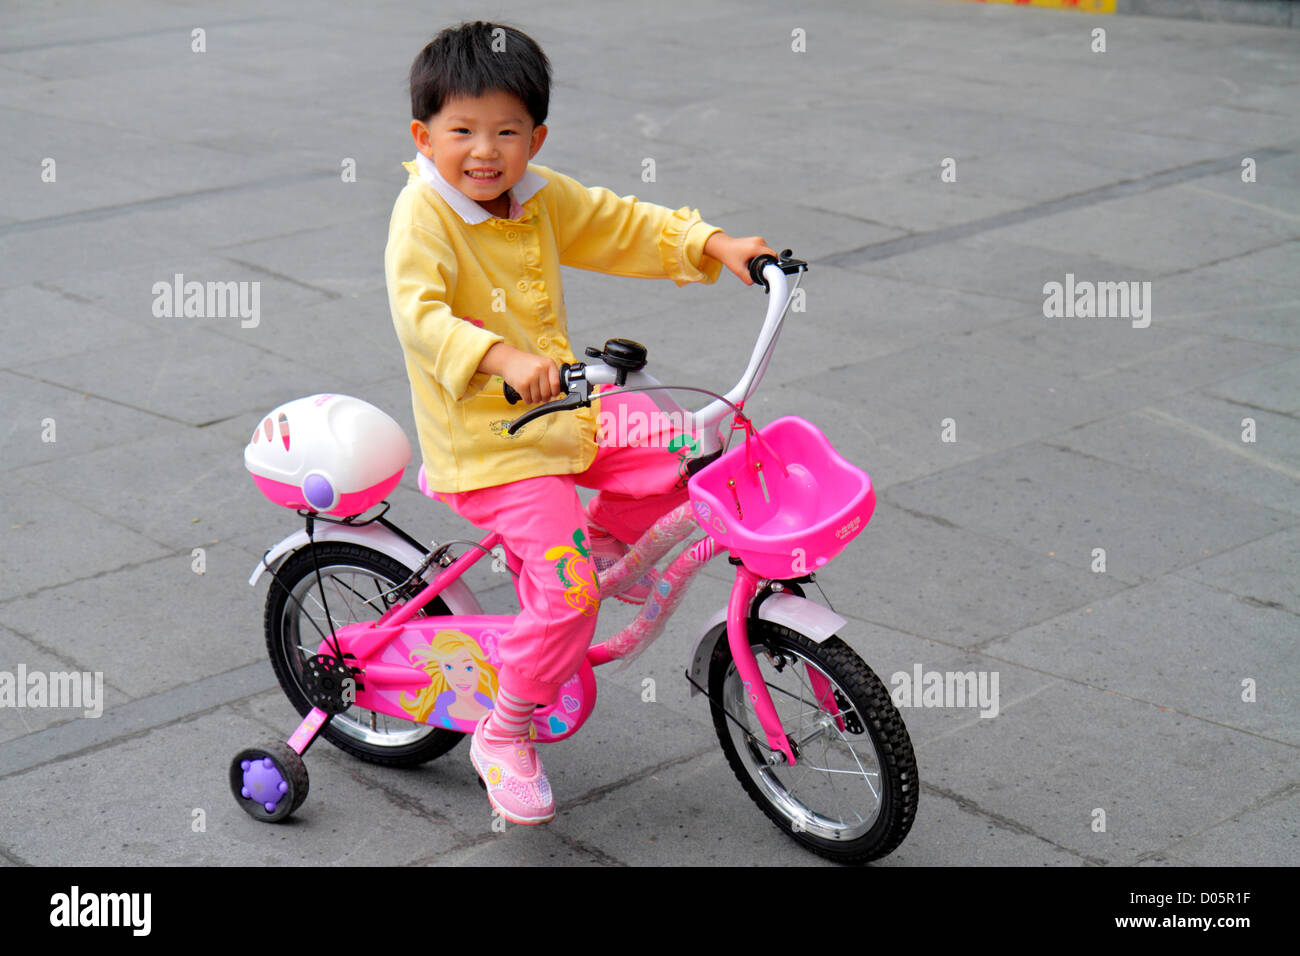 Shanghai China,Chinese Yangpu District,Siping Road,Asian girl girls,youngster,female kids children bicycle,bicycling,riding,biking,rider,training whee Stock Photo